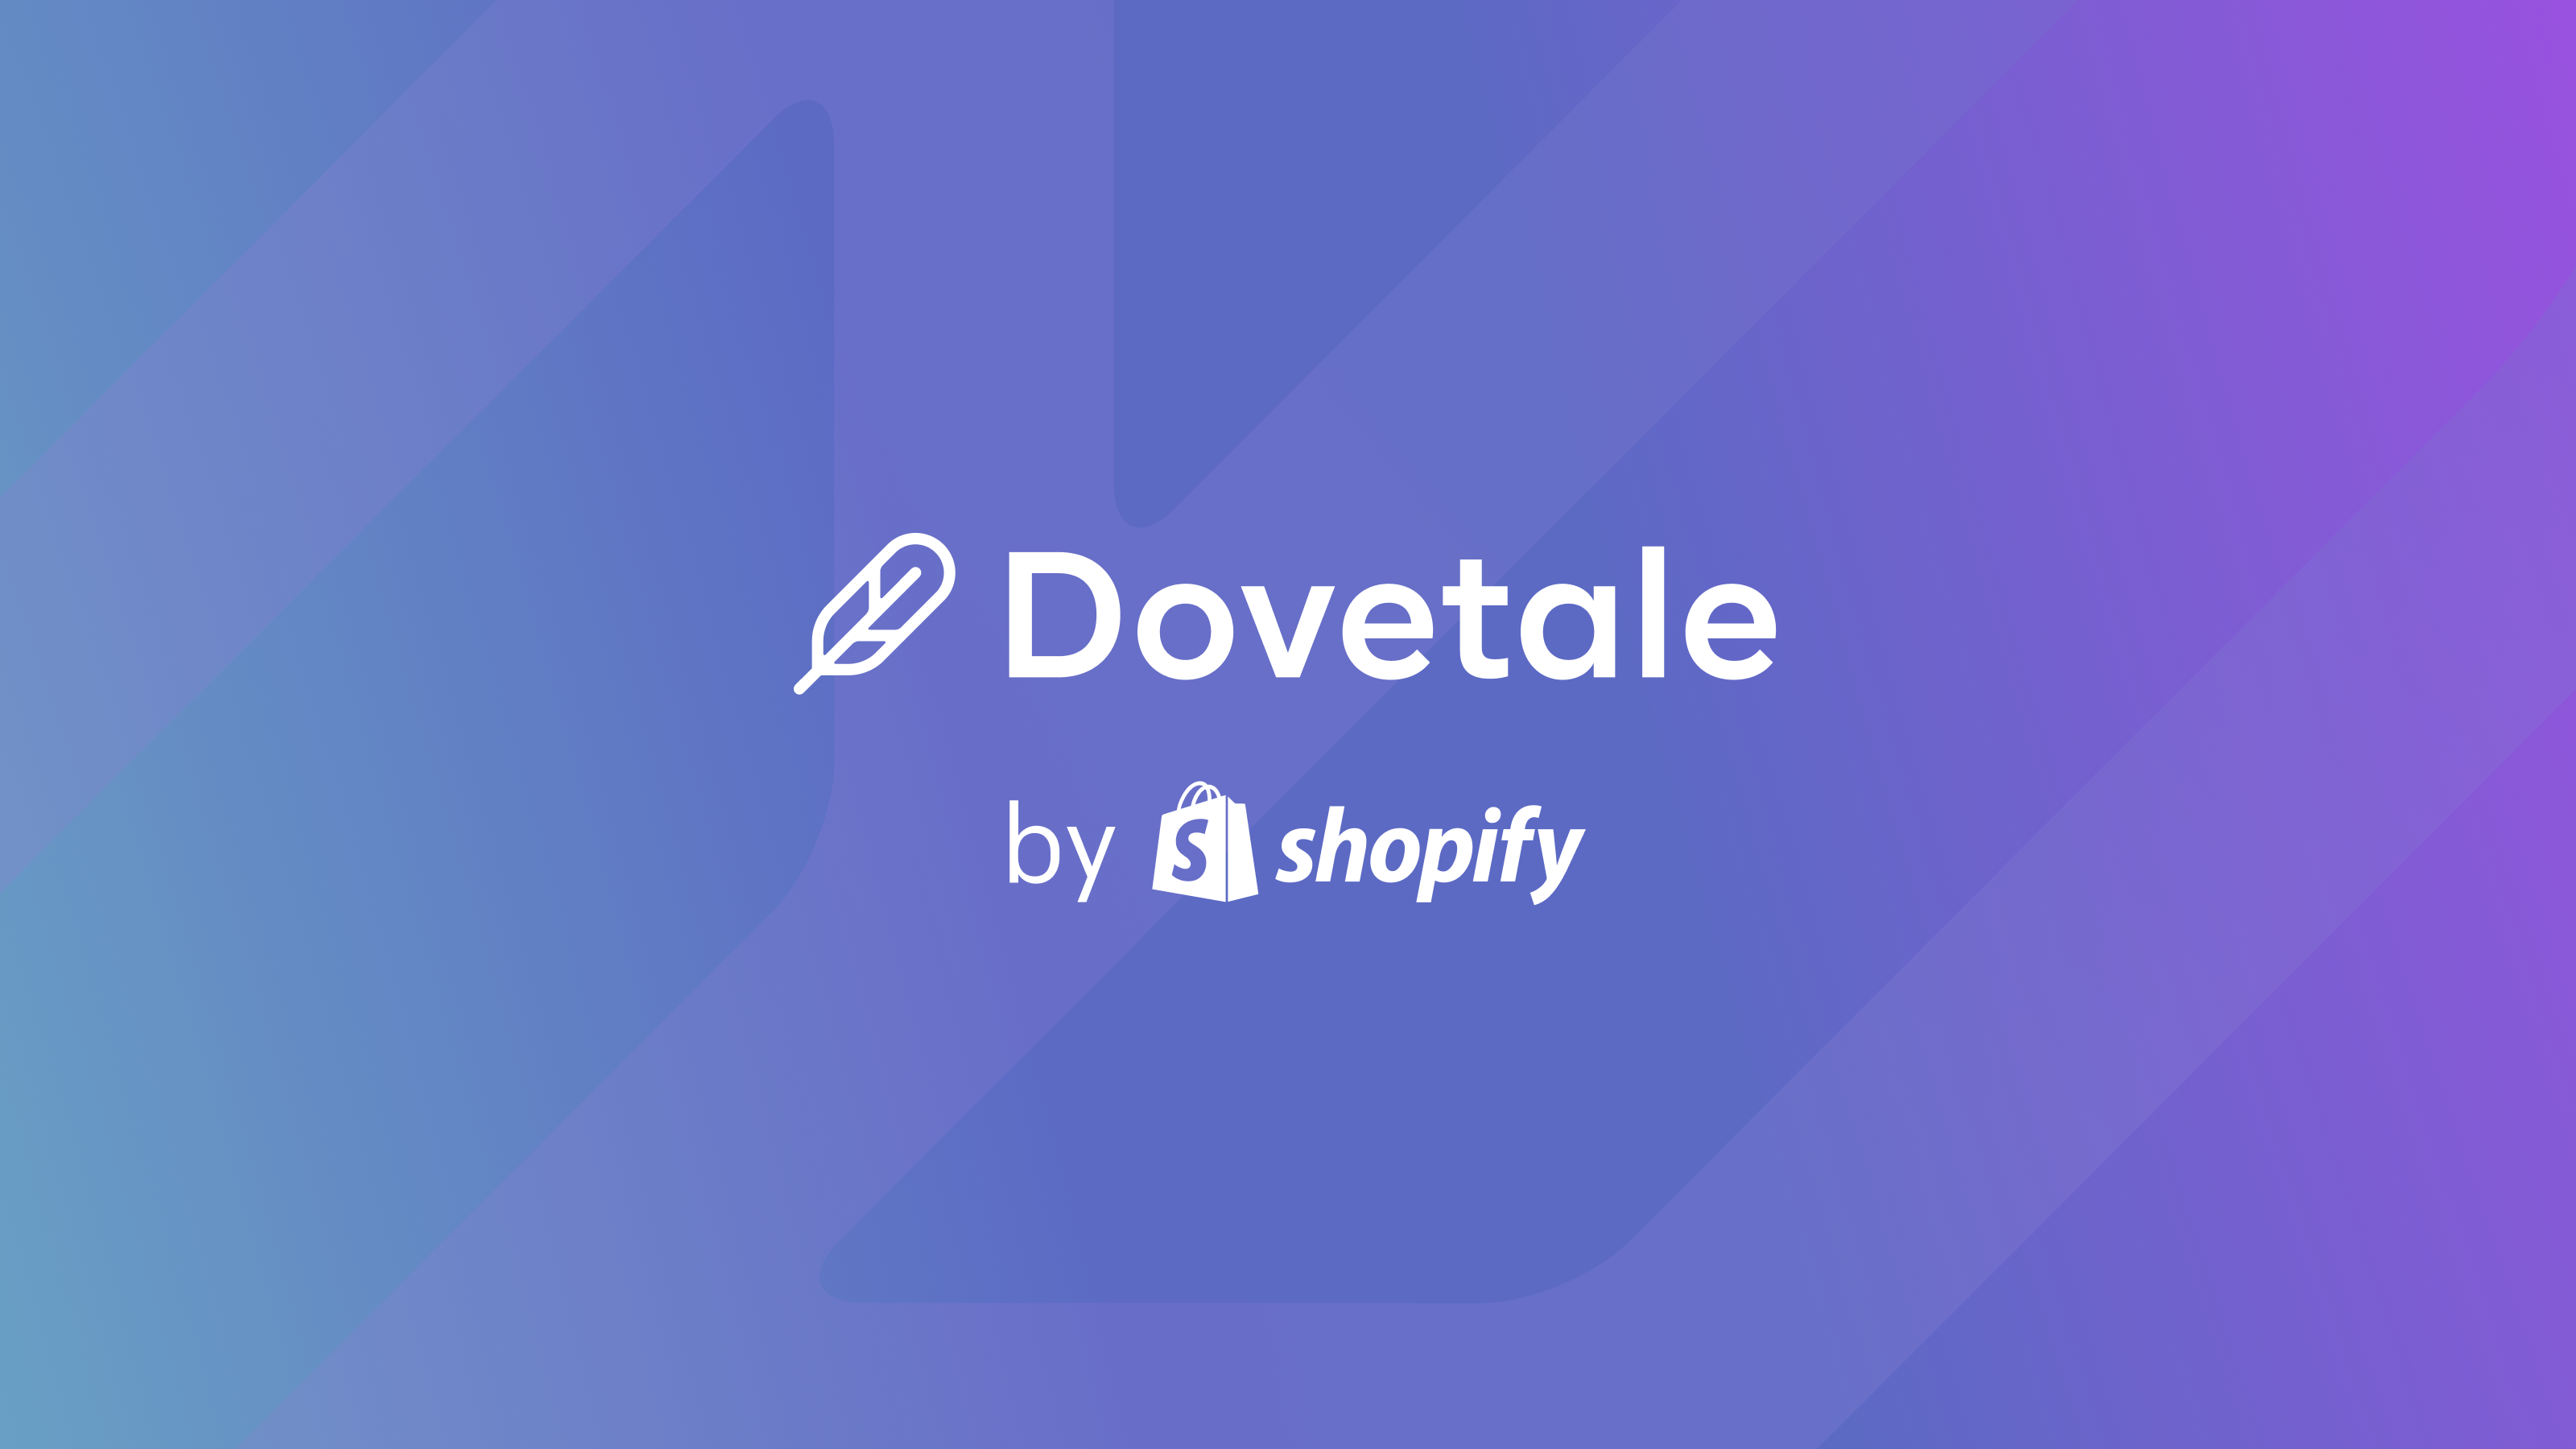 Dovetale by Shopify